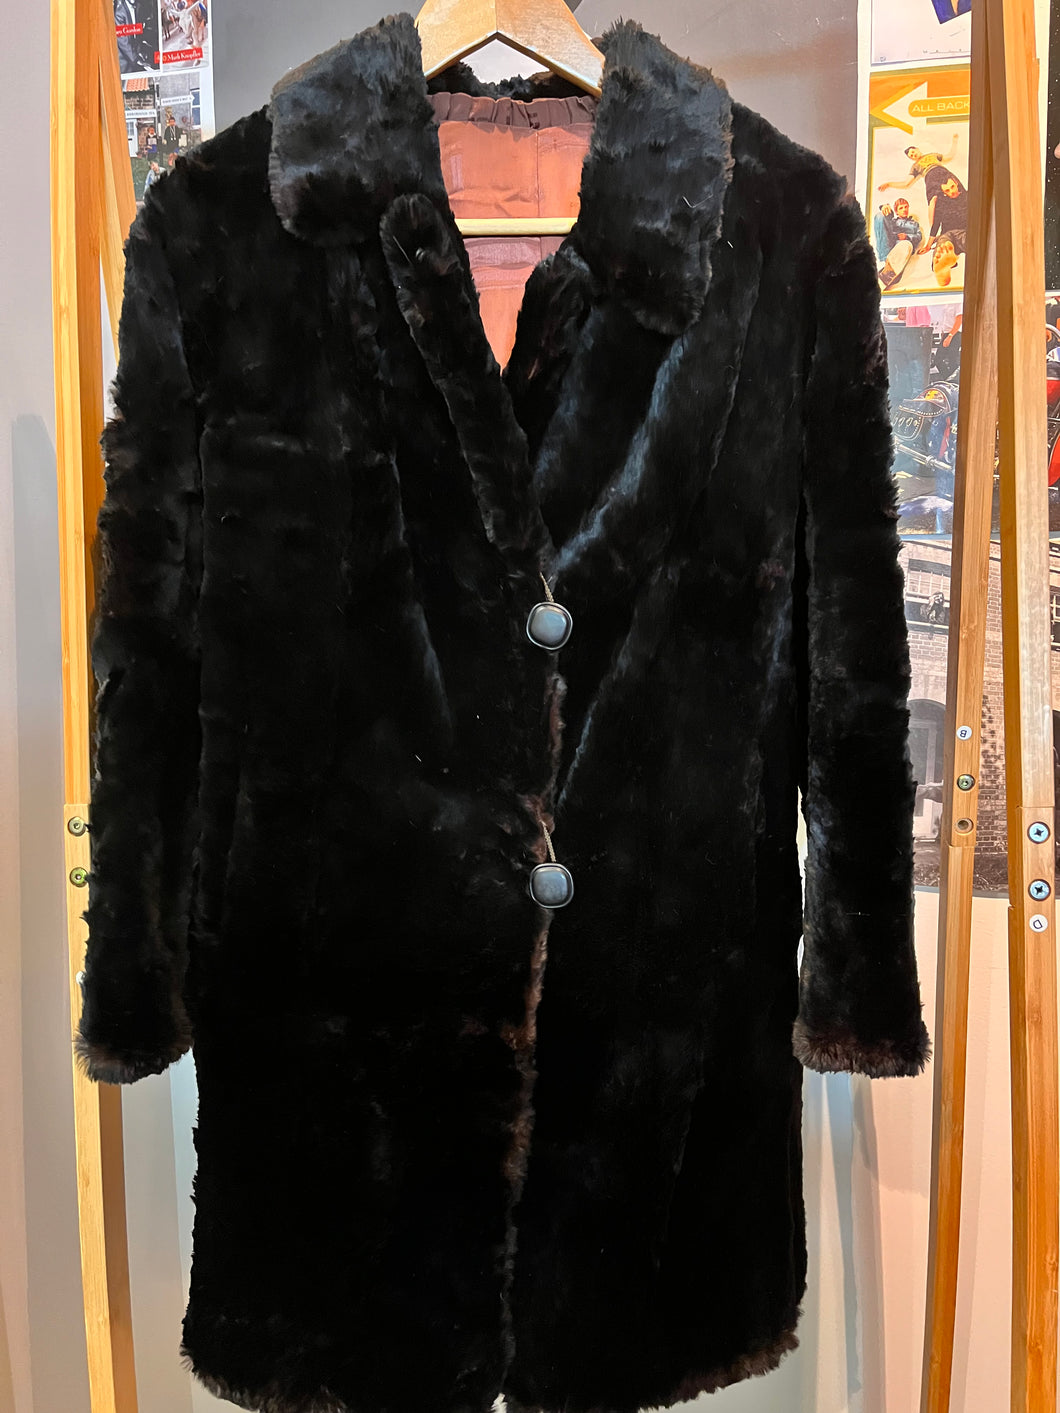 Stunning Black Fur Coat - Size S